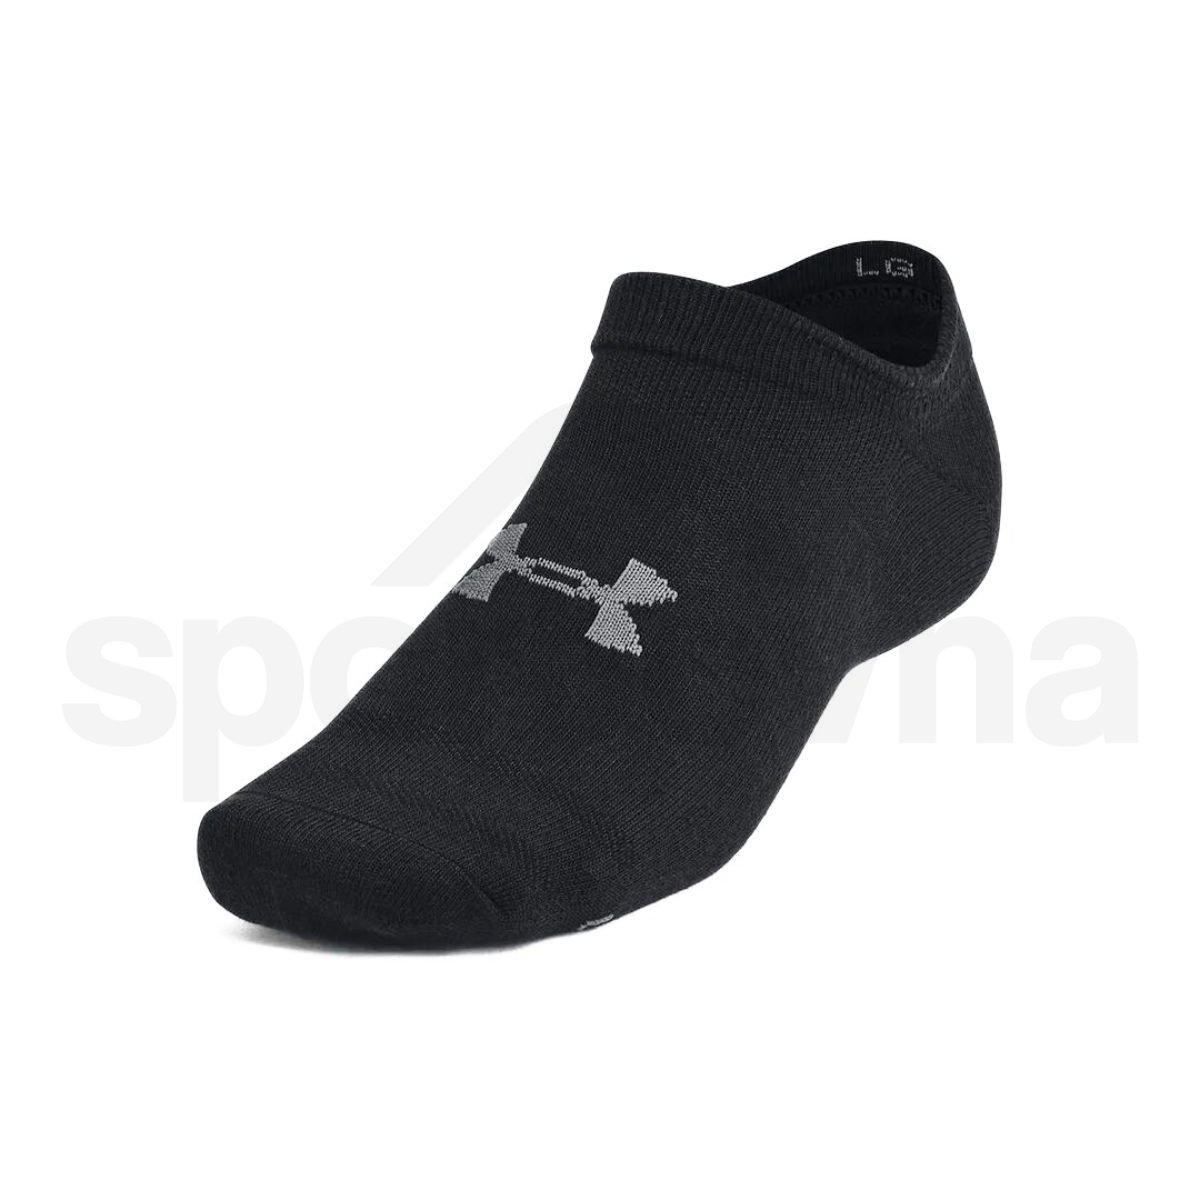 Ponožky Under Armour UA Essential No Show 6pk - černá